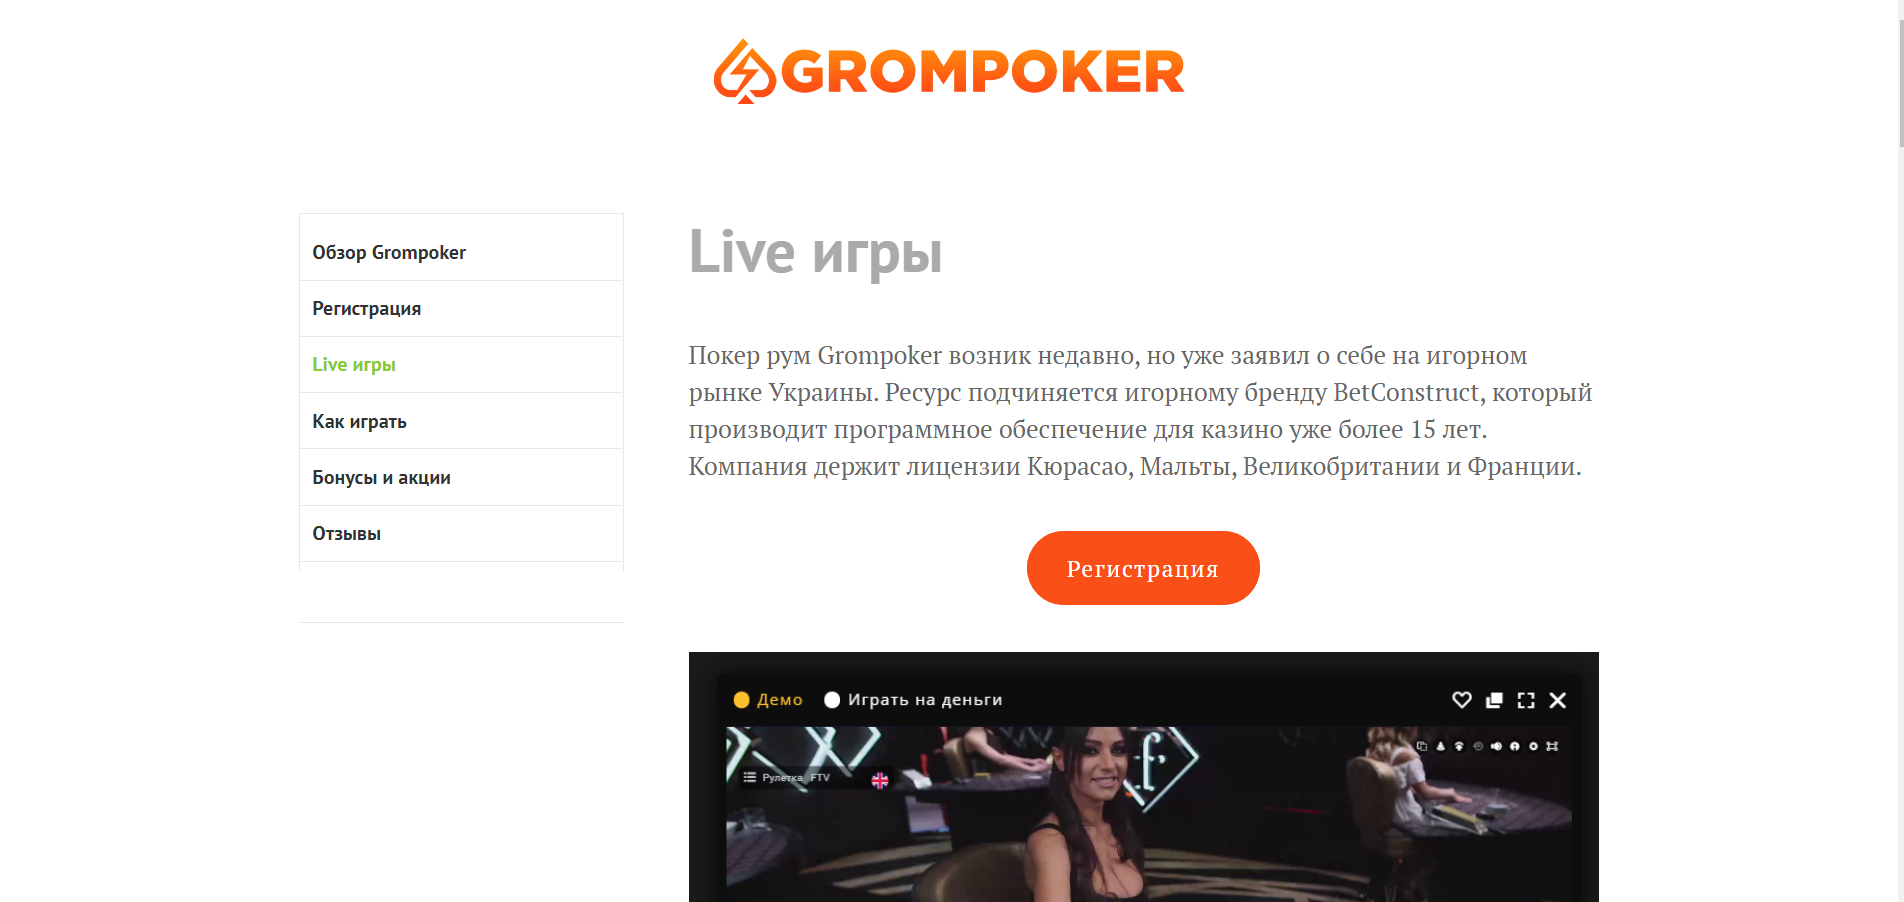 Grom Poker Live Dealer Games